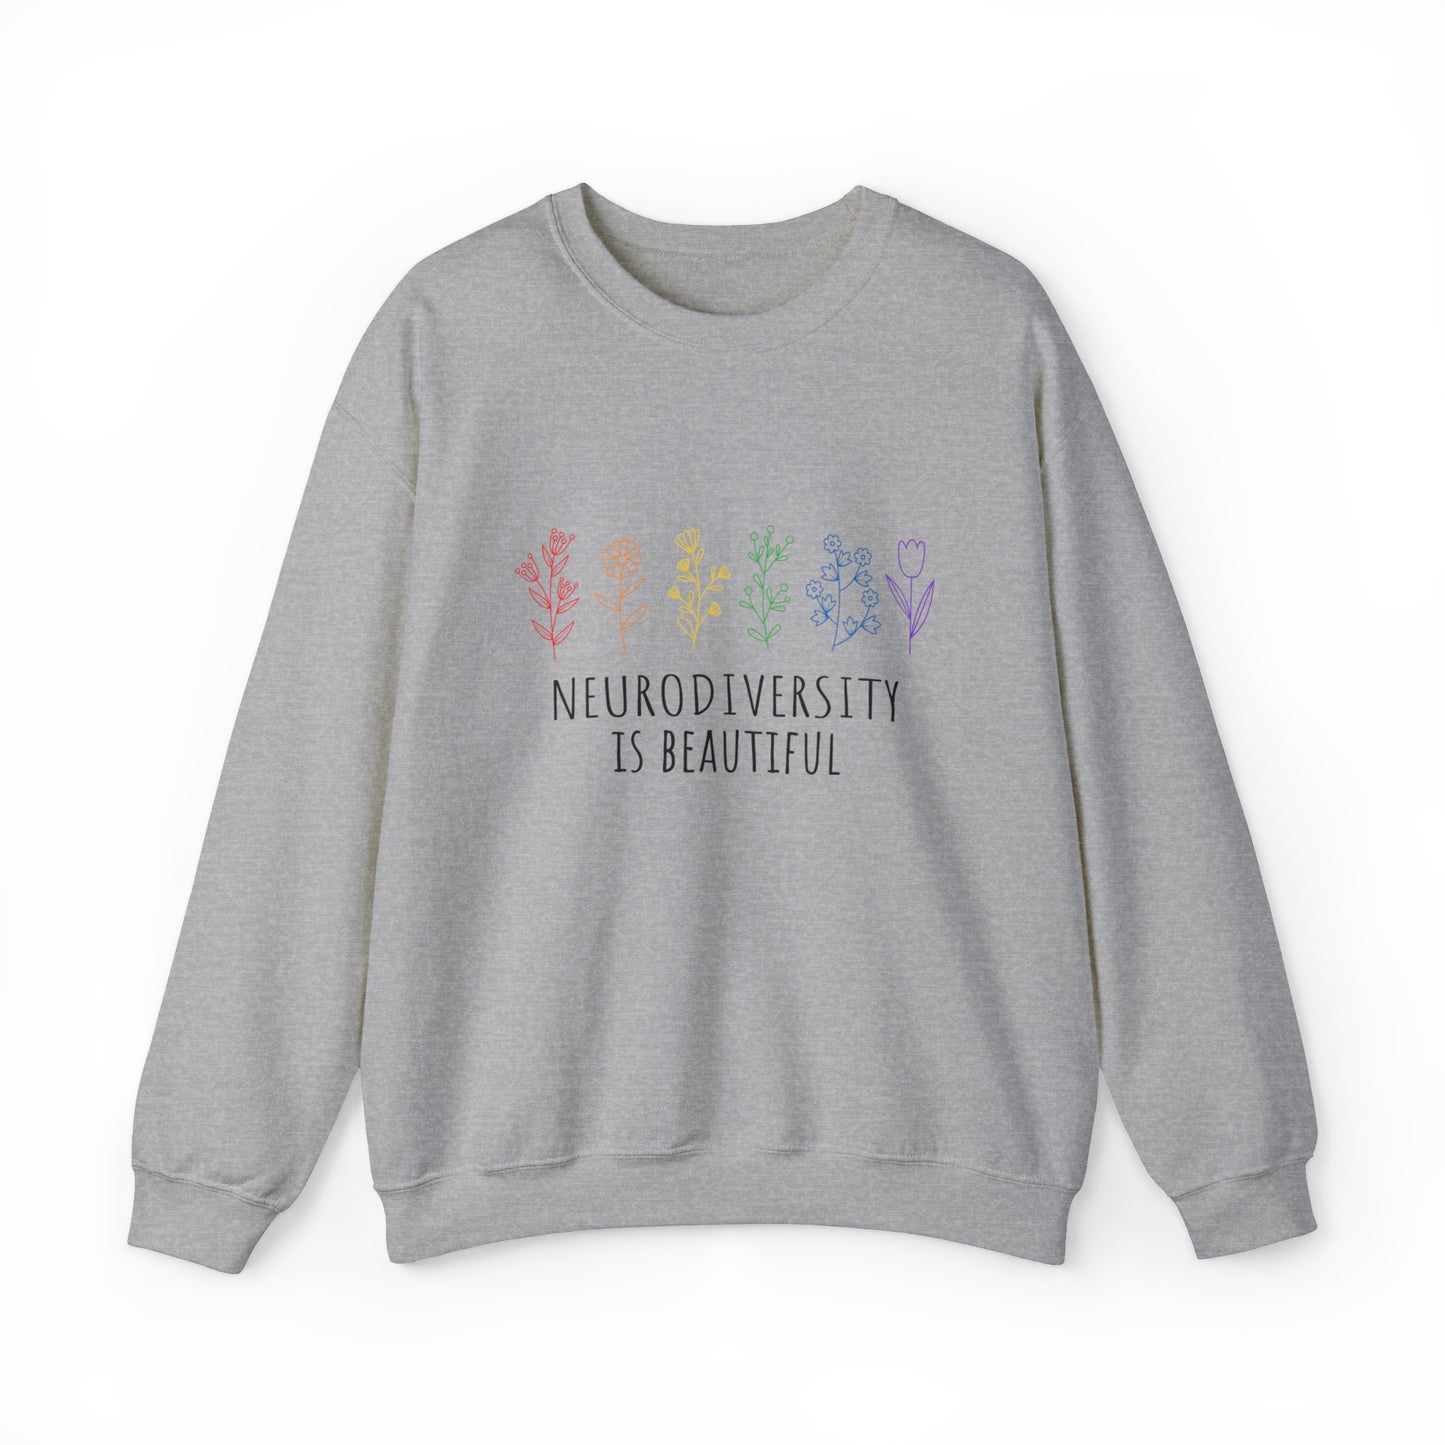 Neurodiversity is beautiful Women's Crewneck Sweatshirt